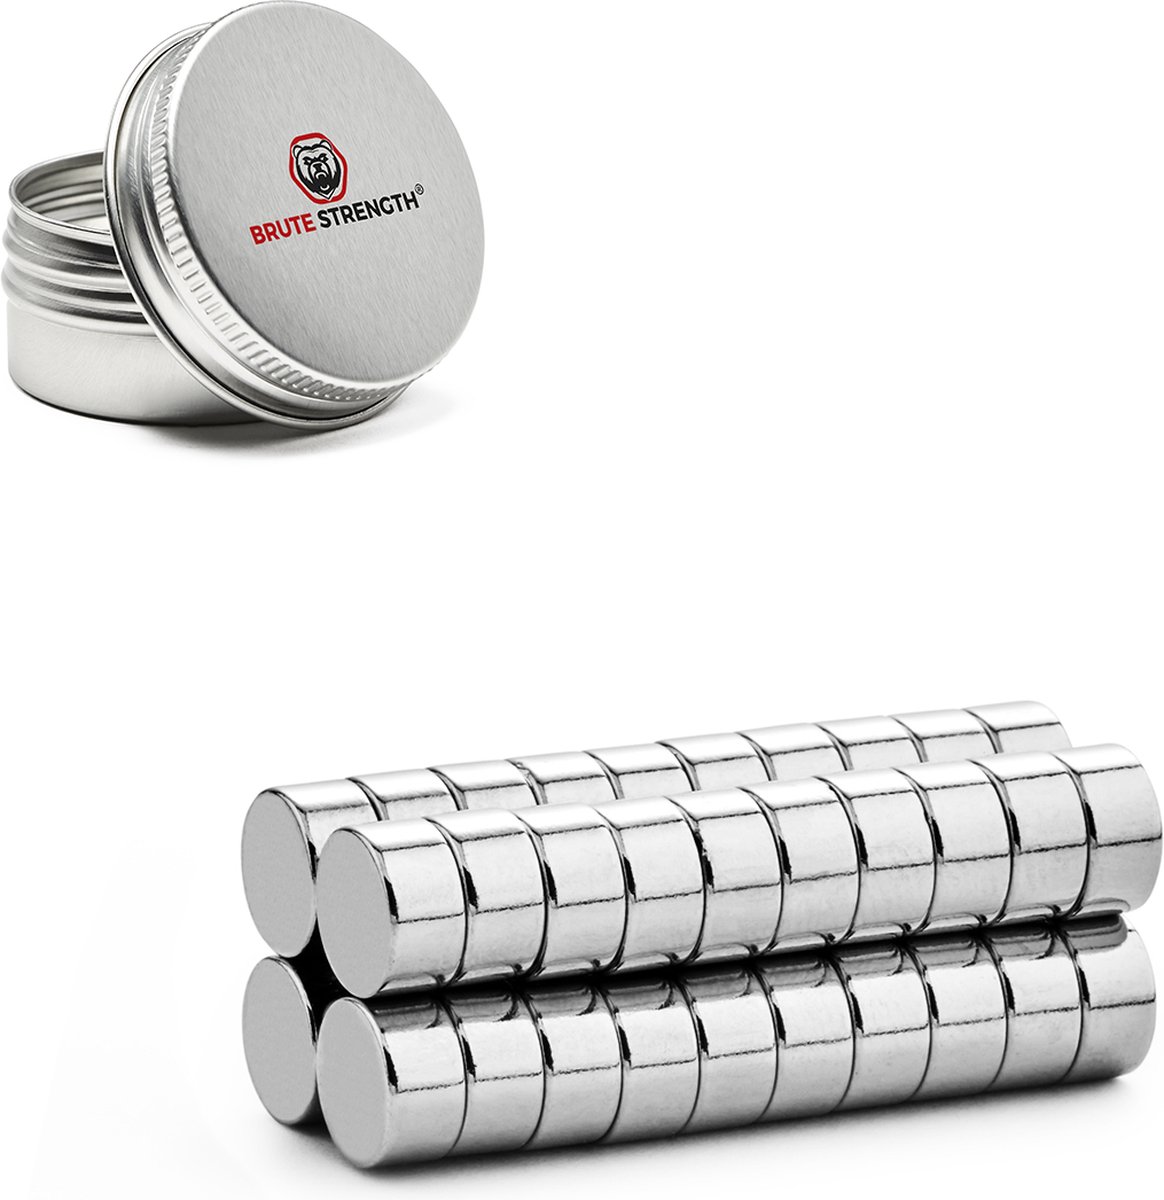 Brute Strength - Super sterke magneten - Rond - 10 x 5 mm - 60 Stuks - Geschikt voor radiatorfolie - Neodymium magneet sterk - Voor koelkast - whiteboard - Brute Strength